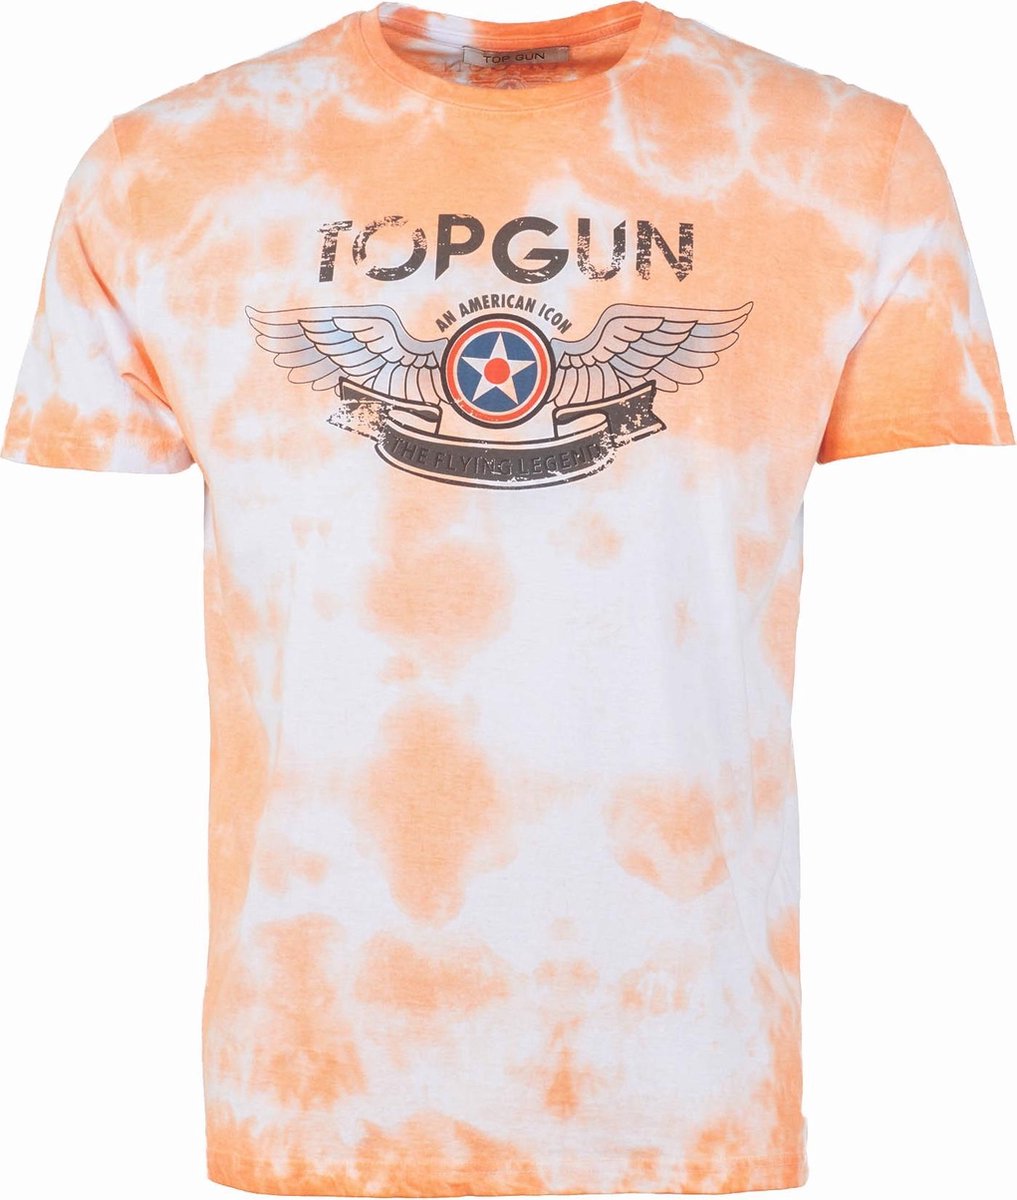 Top Gun ® T-Shirt American Icon camouflage (L)